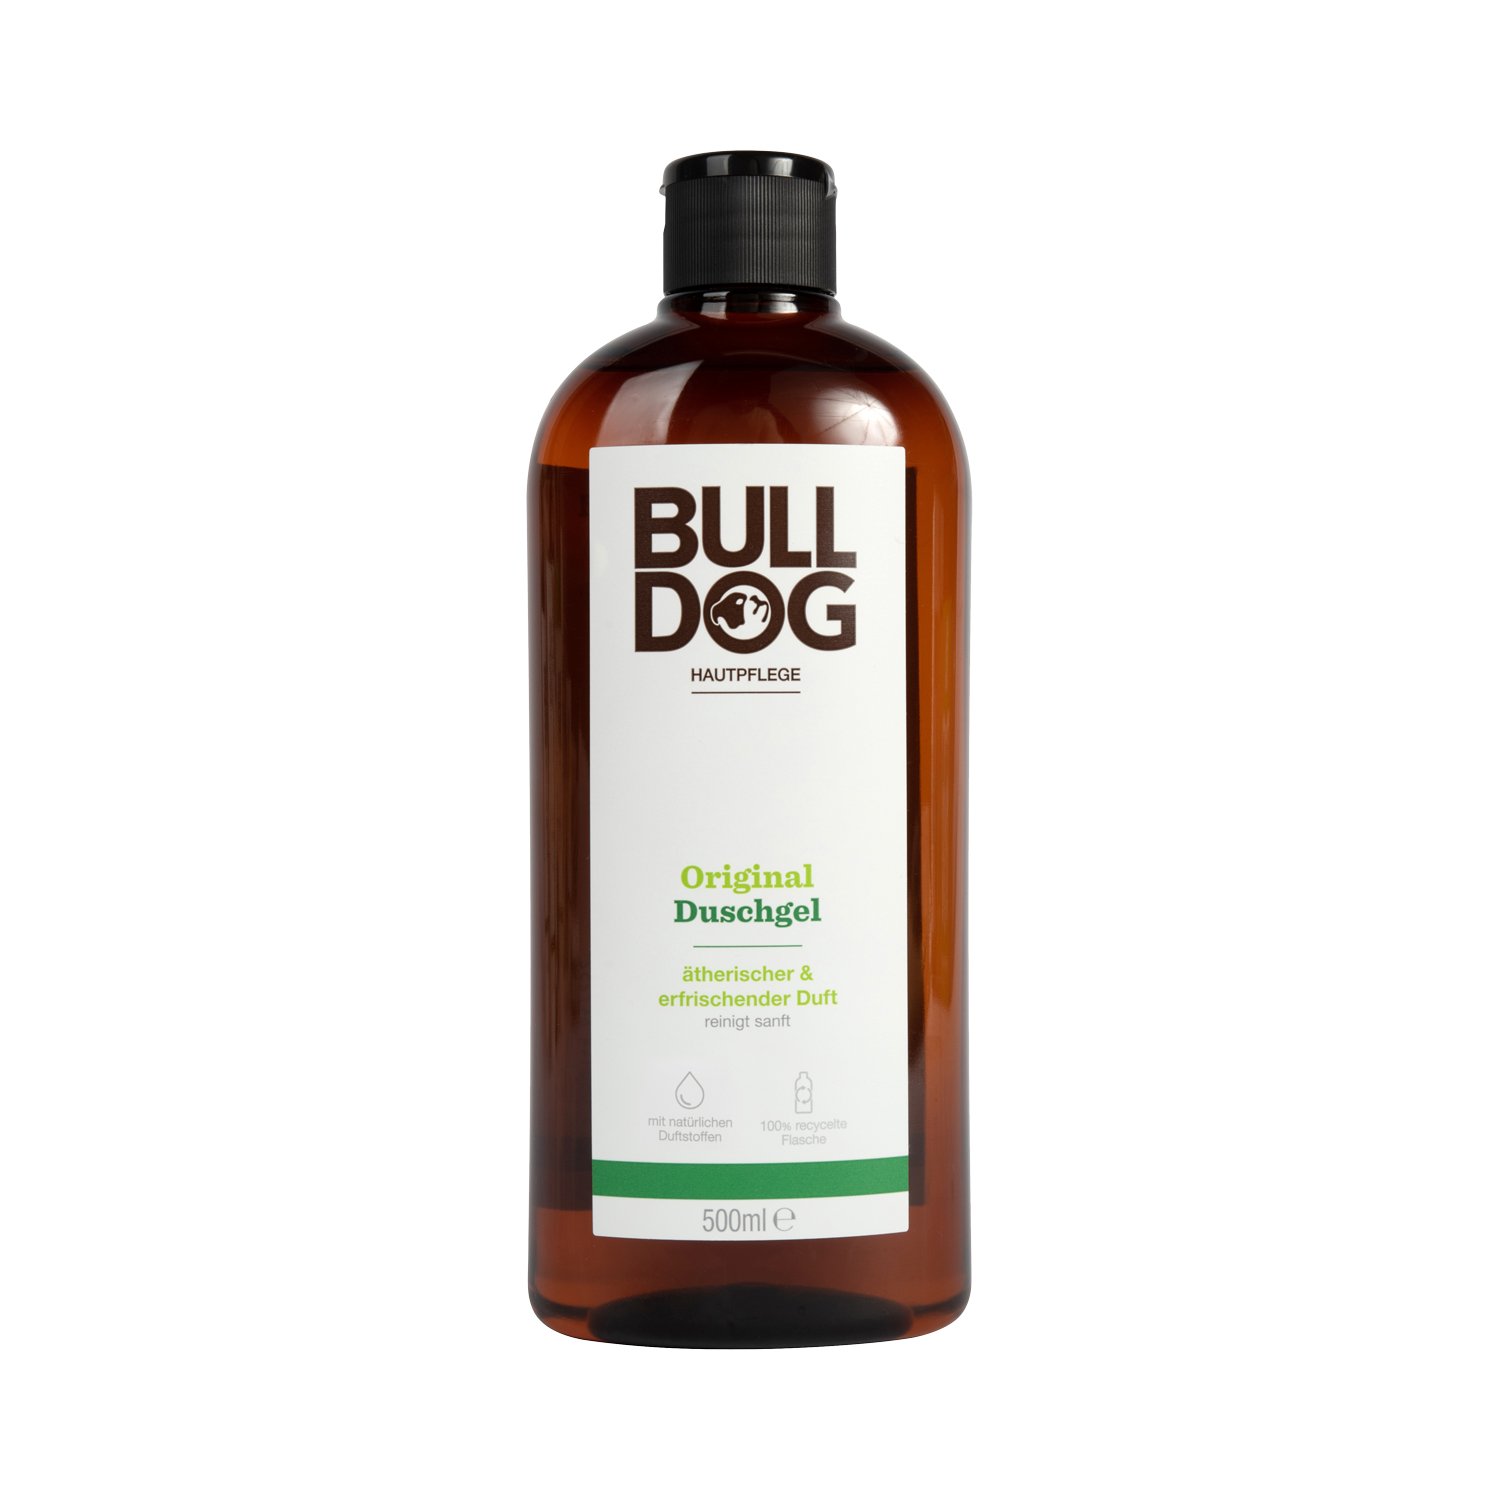 Bulldog - Original Duschgel